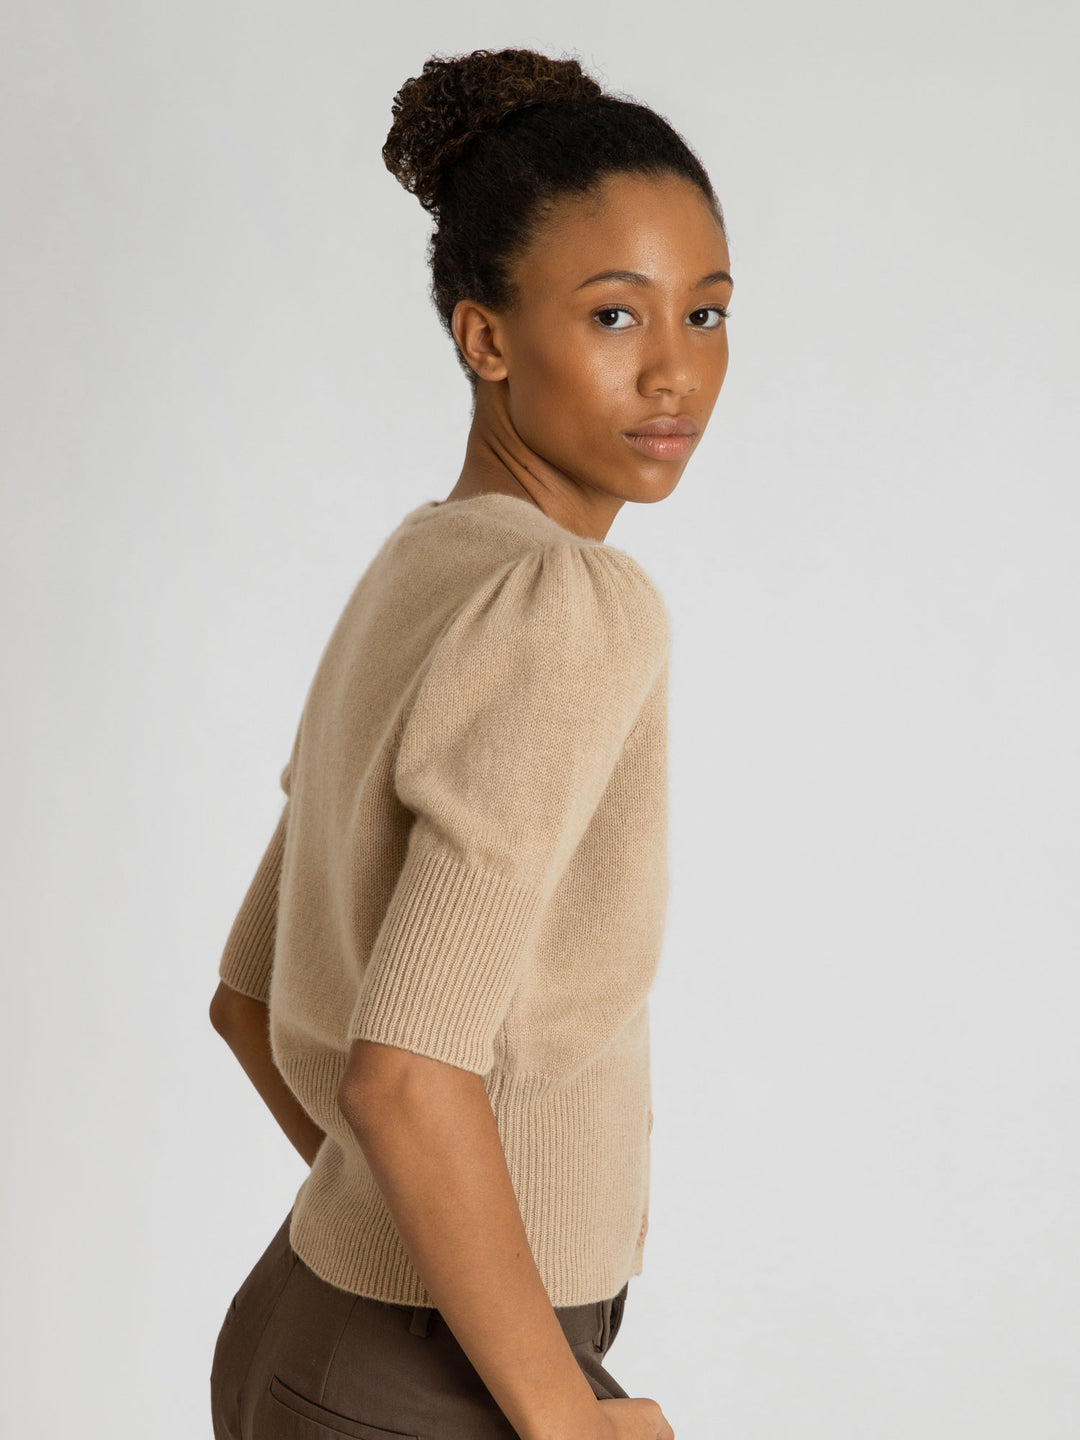 Sand colored, short sleeved. cashmere cardigan grace in 100% pure cashmere by Kashmina. Scandinavian design.